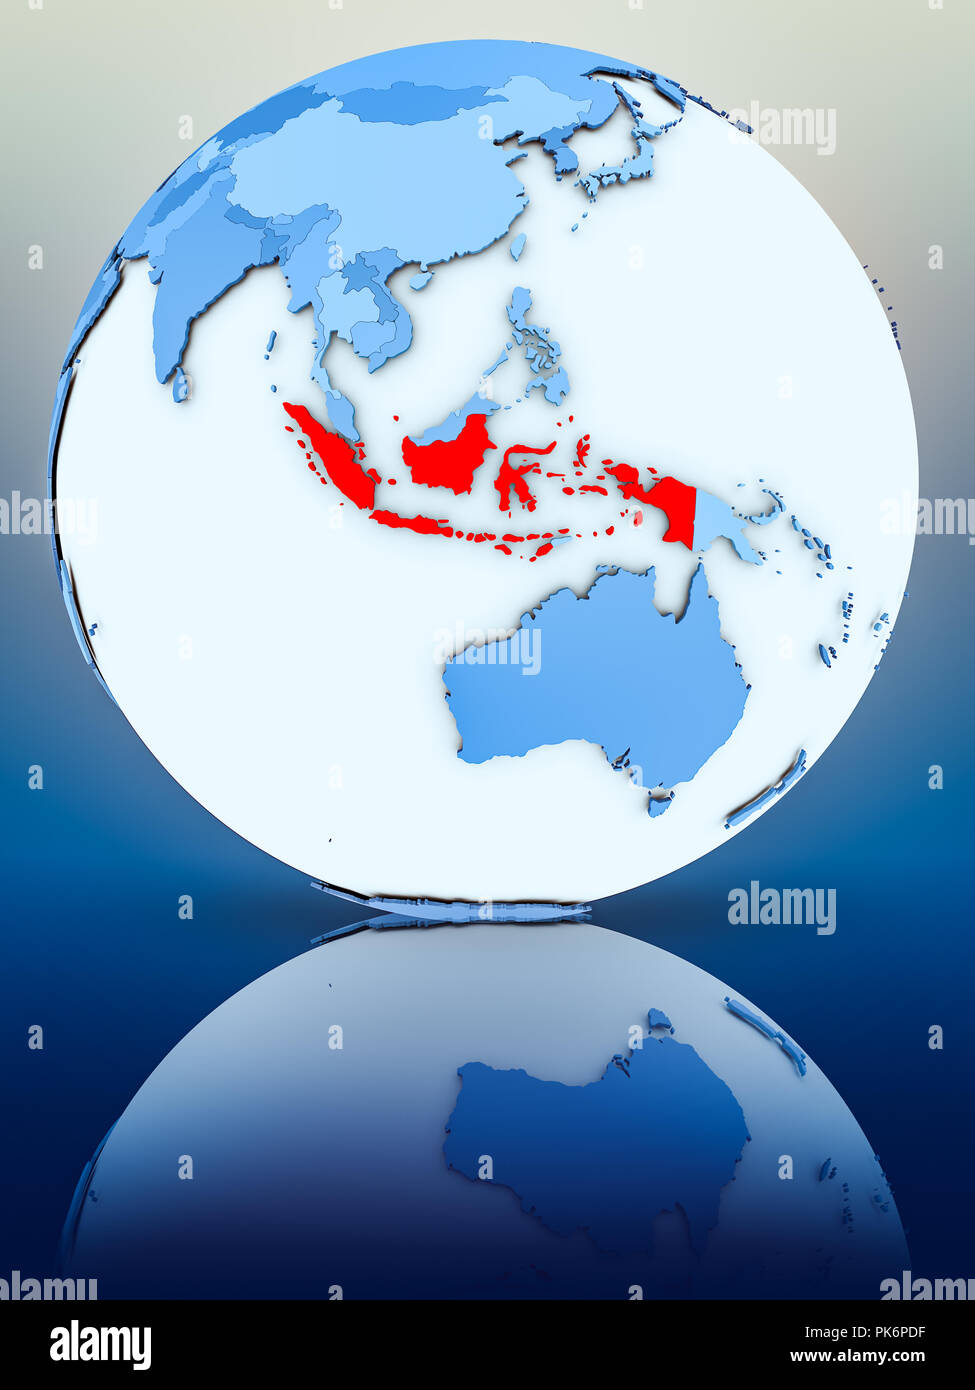 Indonesia on blue globe on reflective surface. 3D illustration. Stock Photo